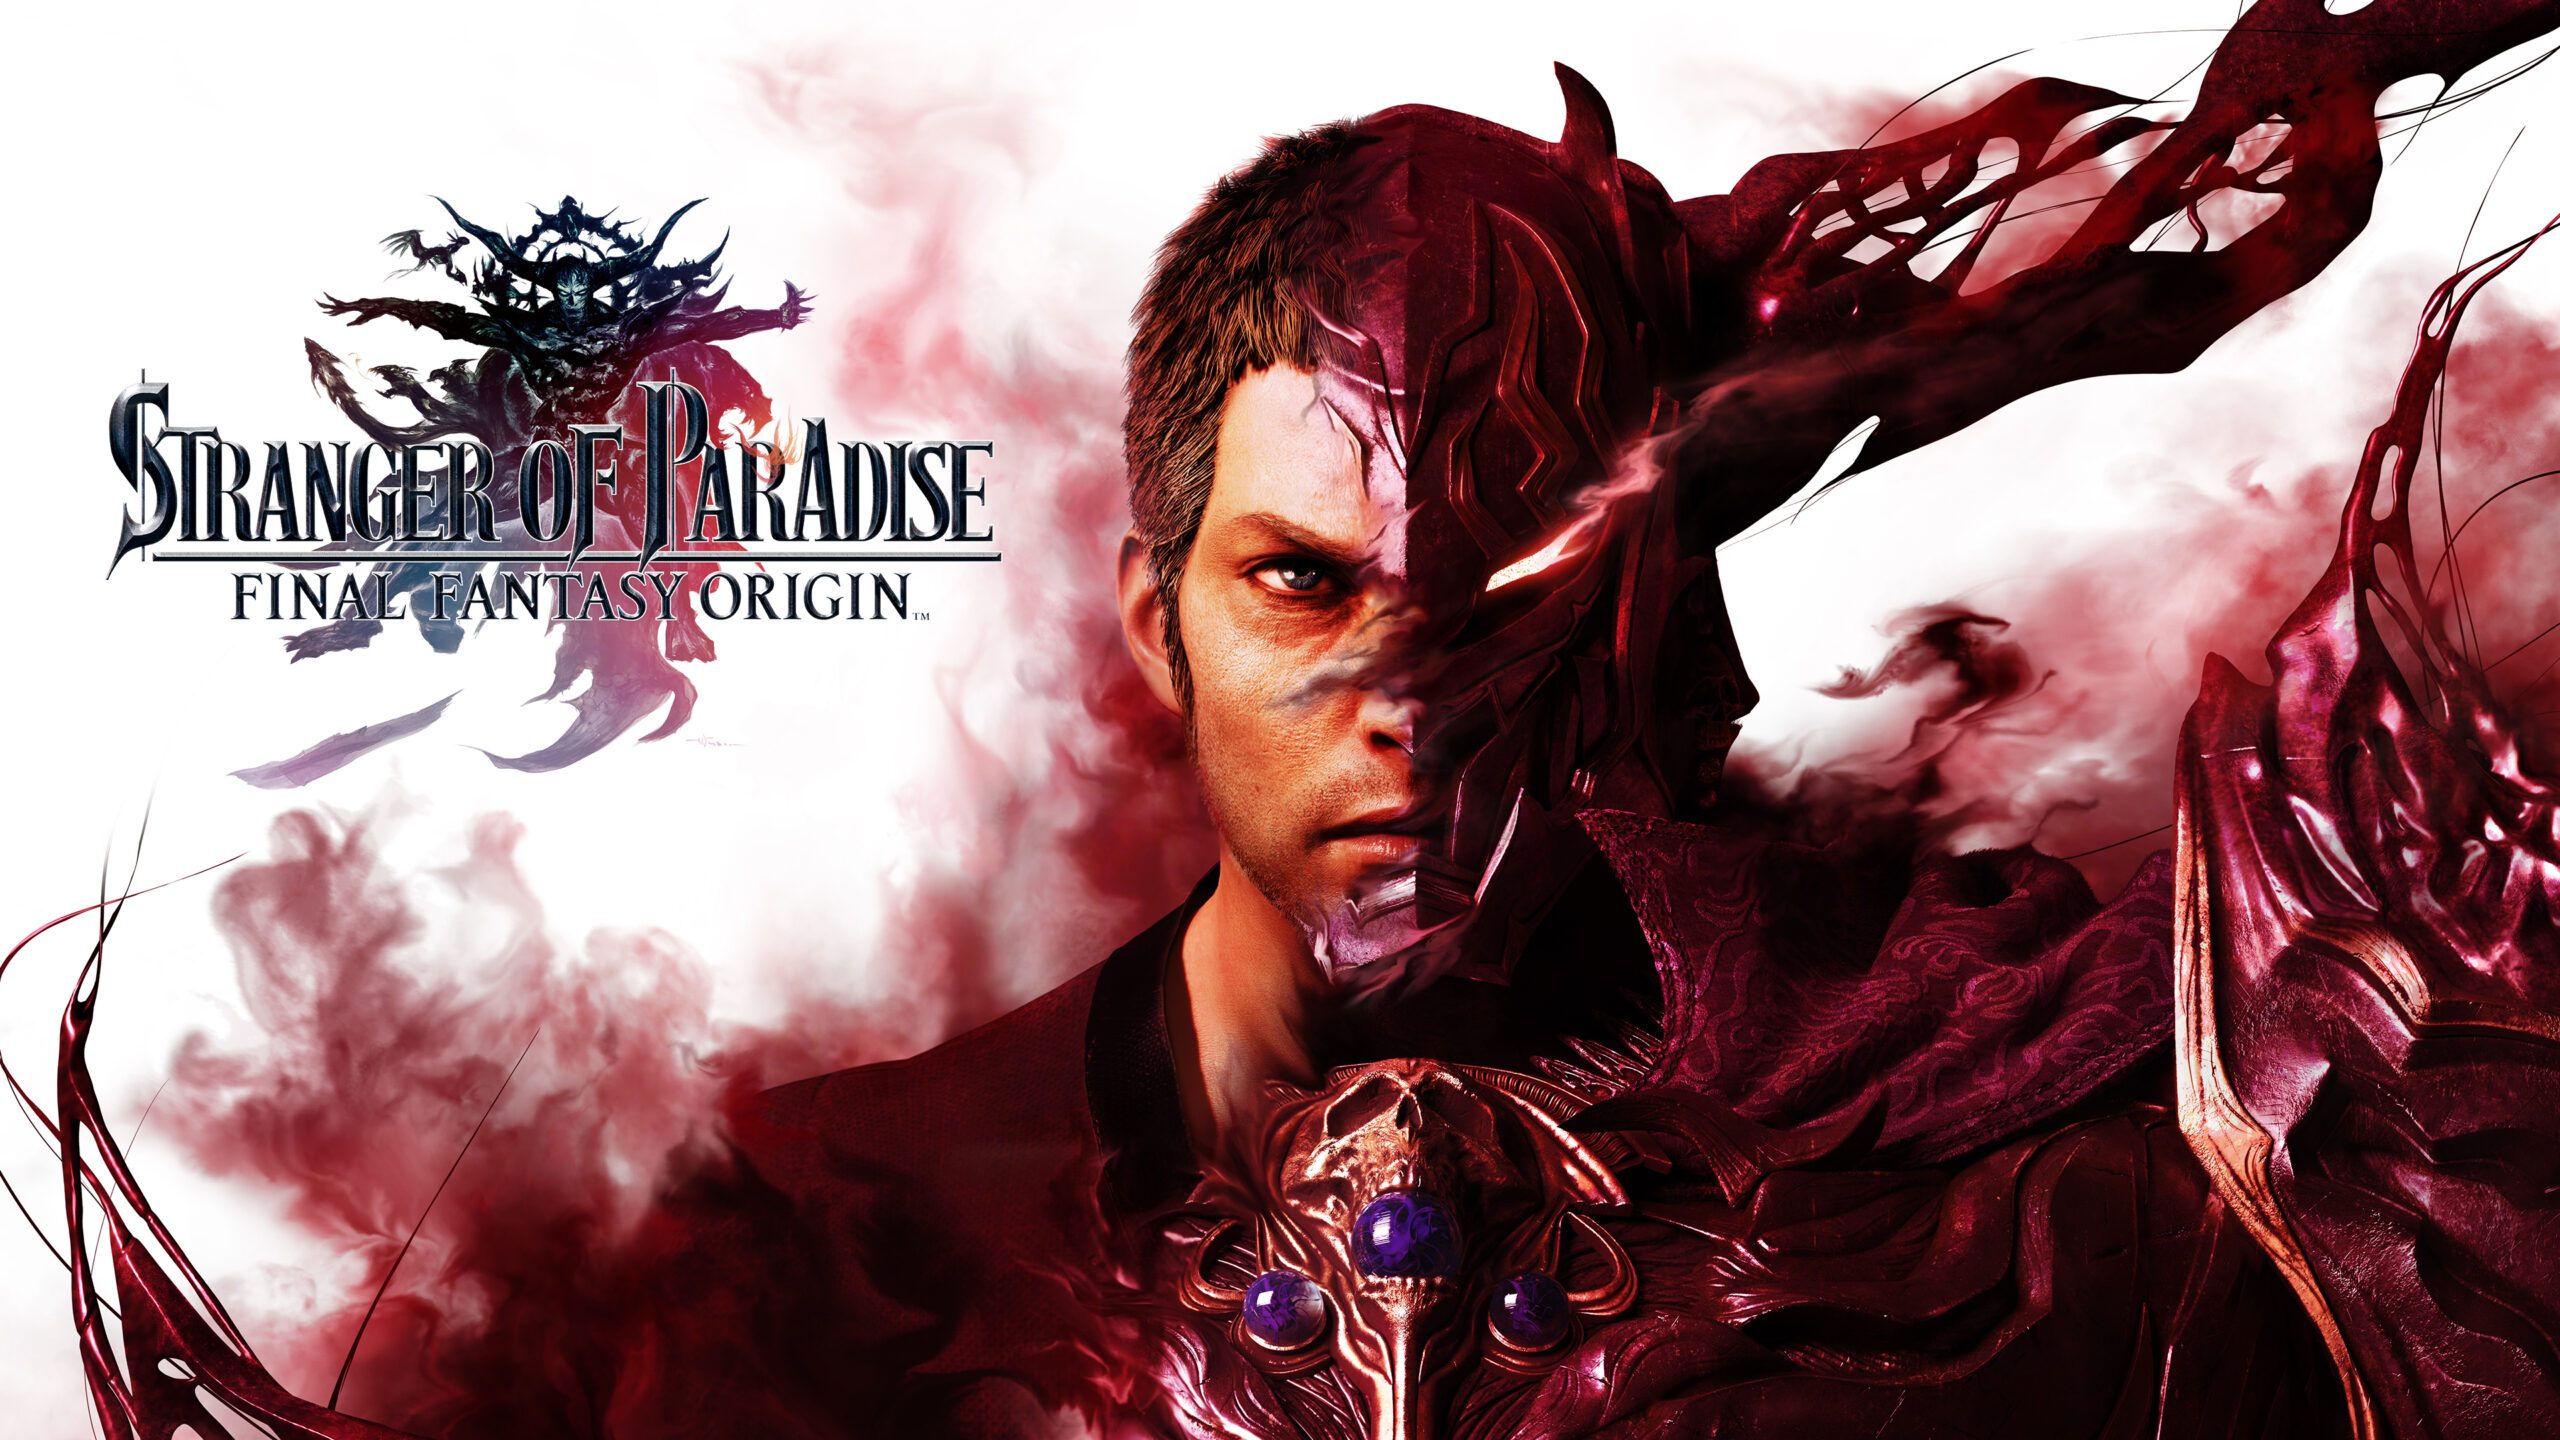 Jogo PS4 Stranger of Paradise: Final Fantasy Origin